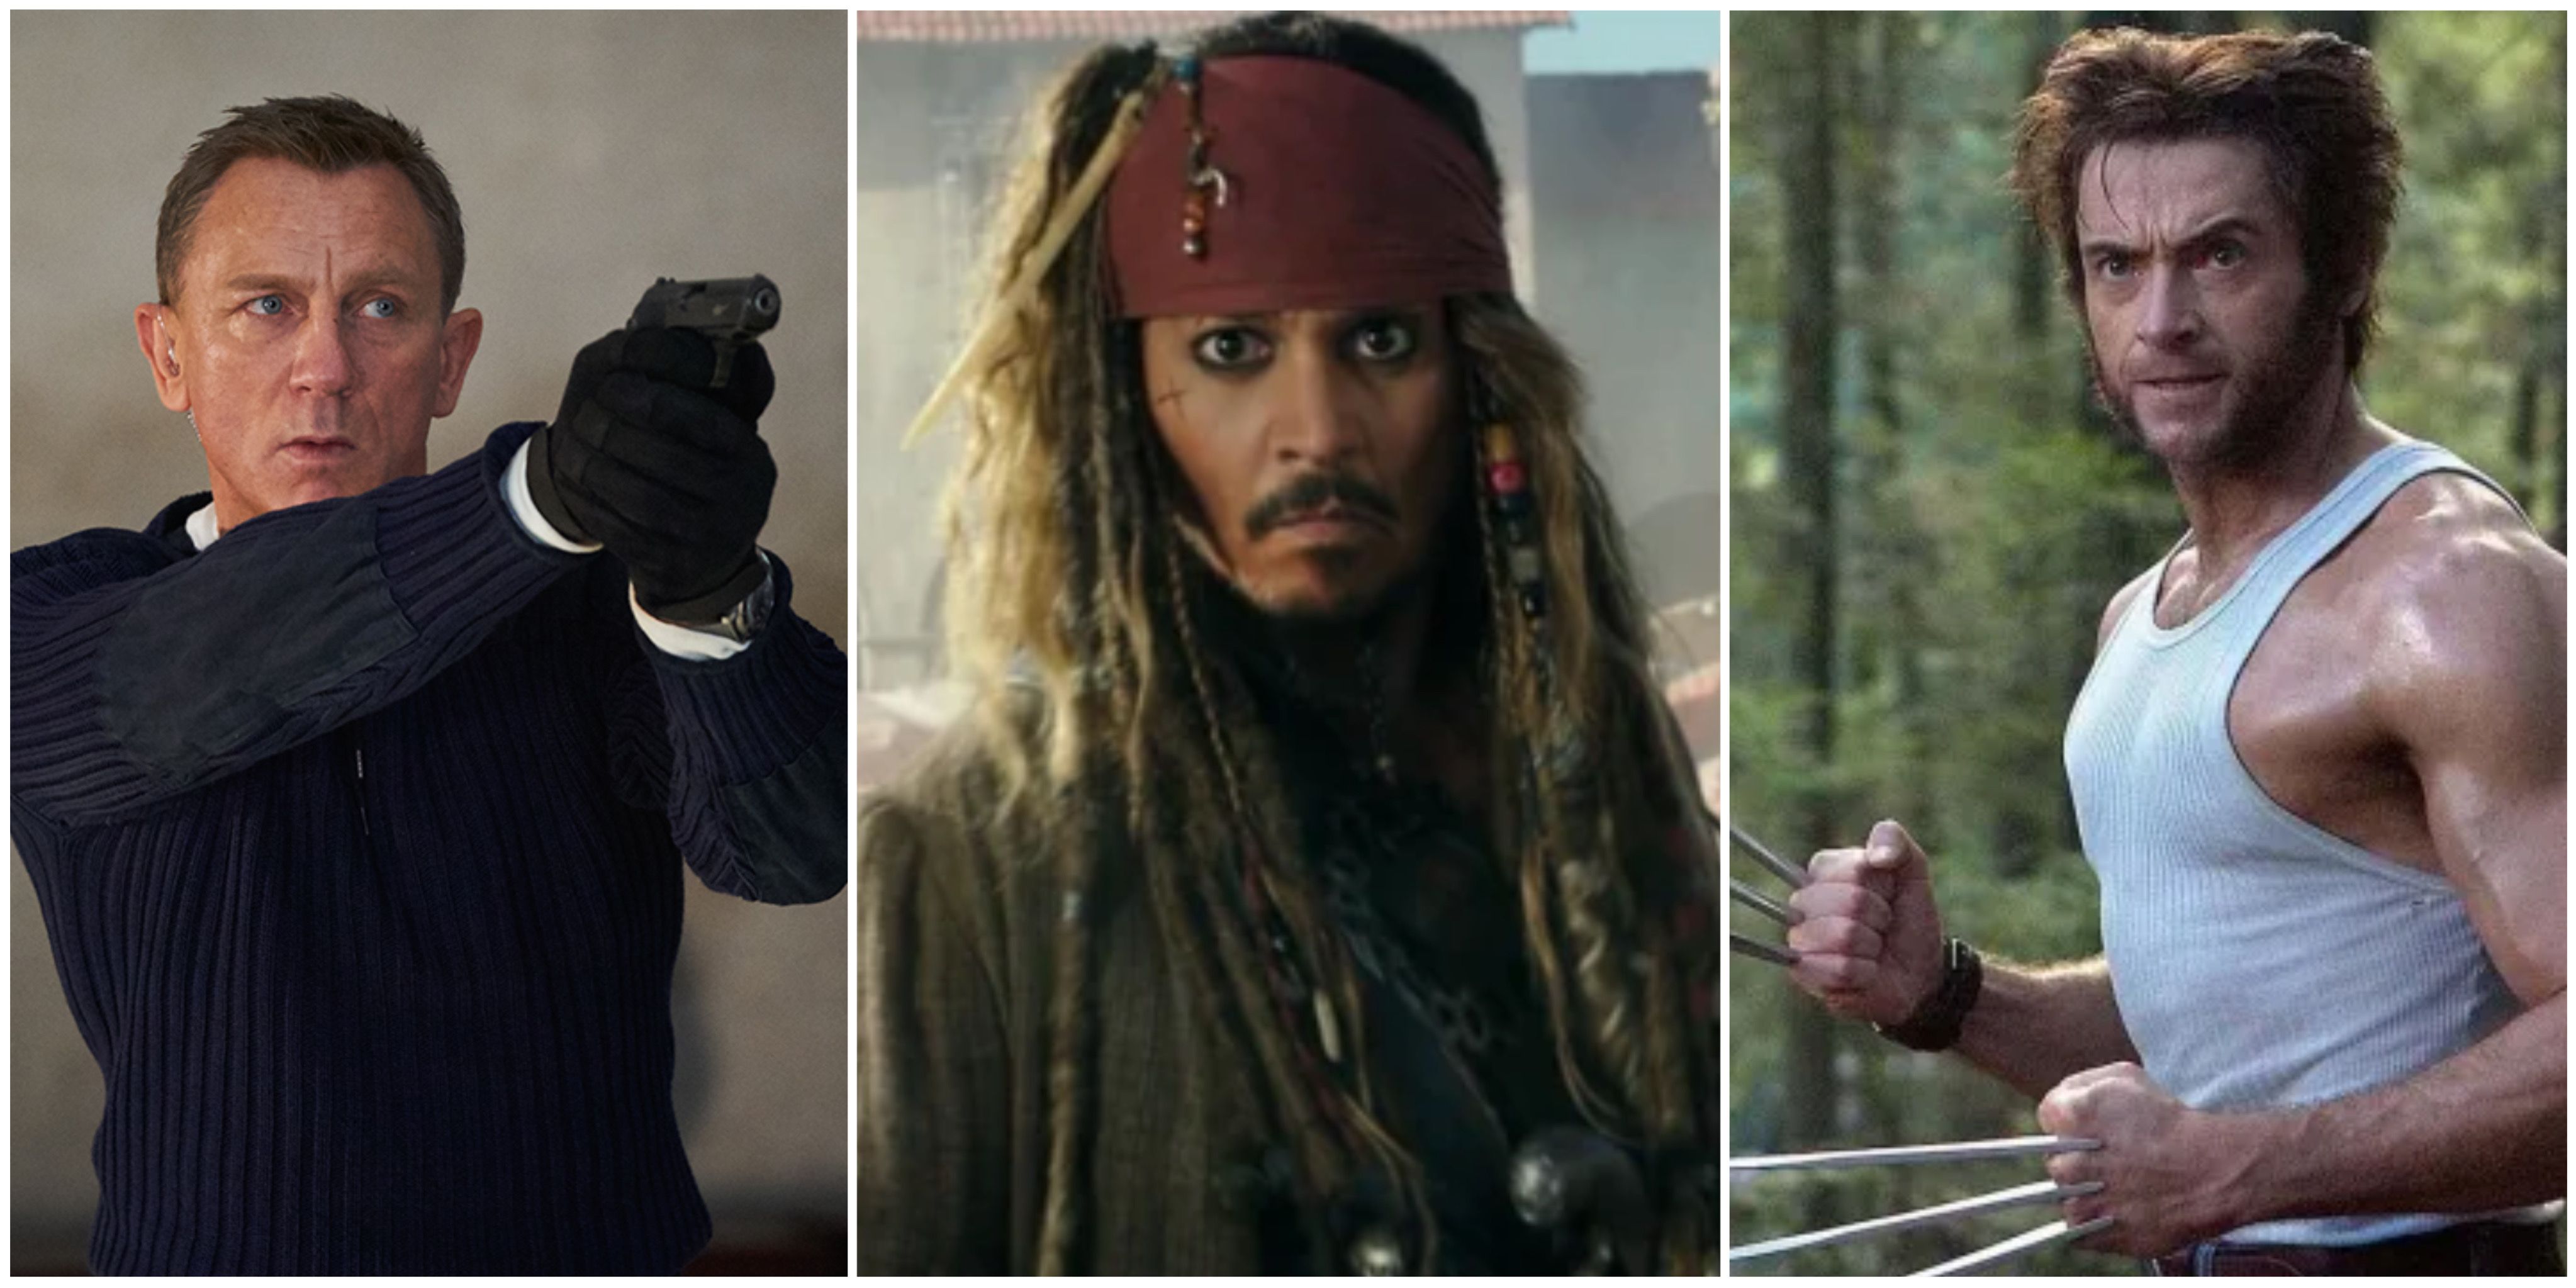 Daniel Craig as James Bond, Johnny Depp as Jack Sparrow, and Hugh Jackman as Wolverine